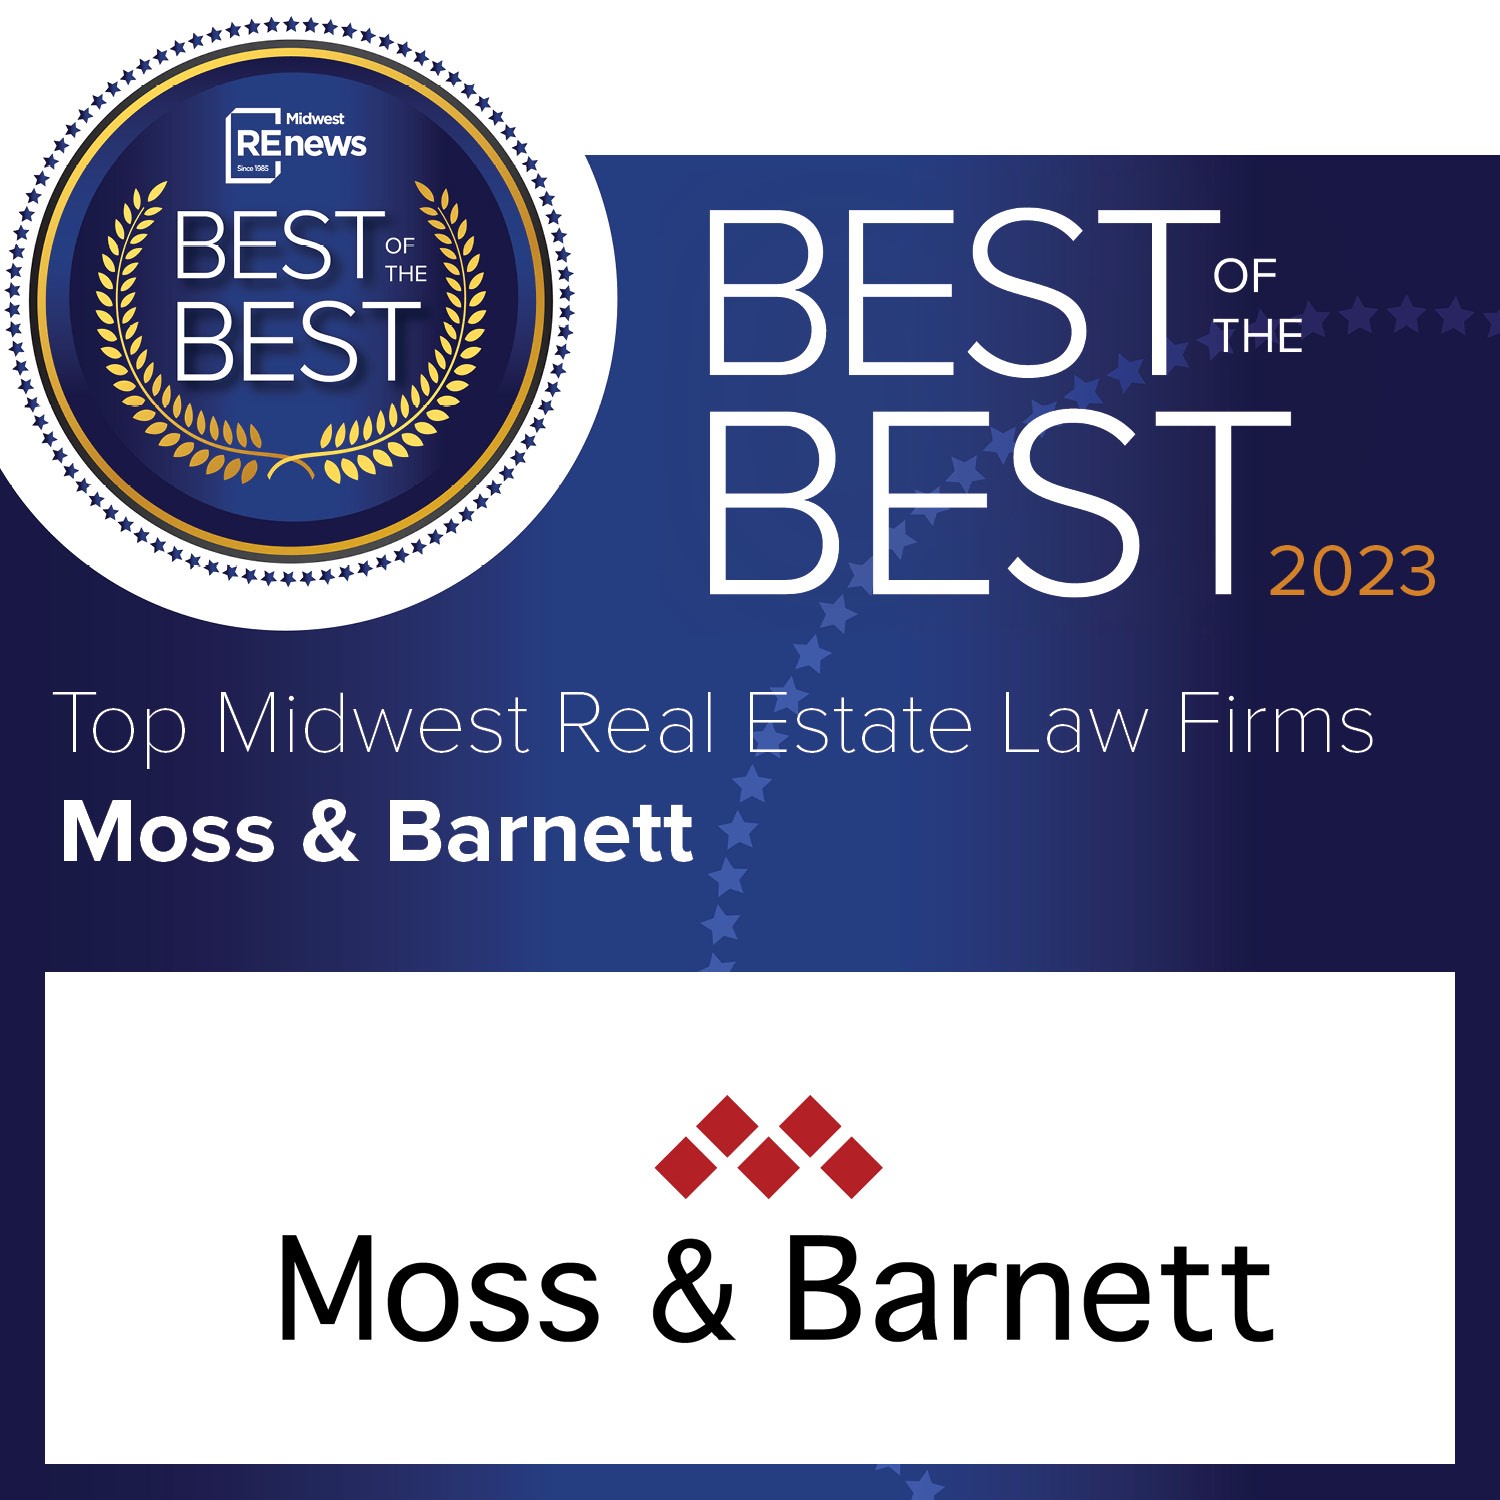 Moss & Barnett Badge for Midwest Real Estate News "Best of the Best" 2023